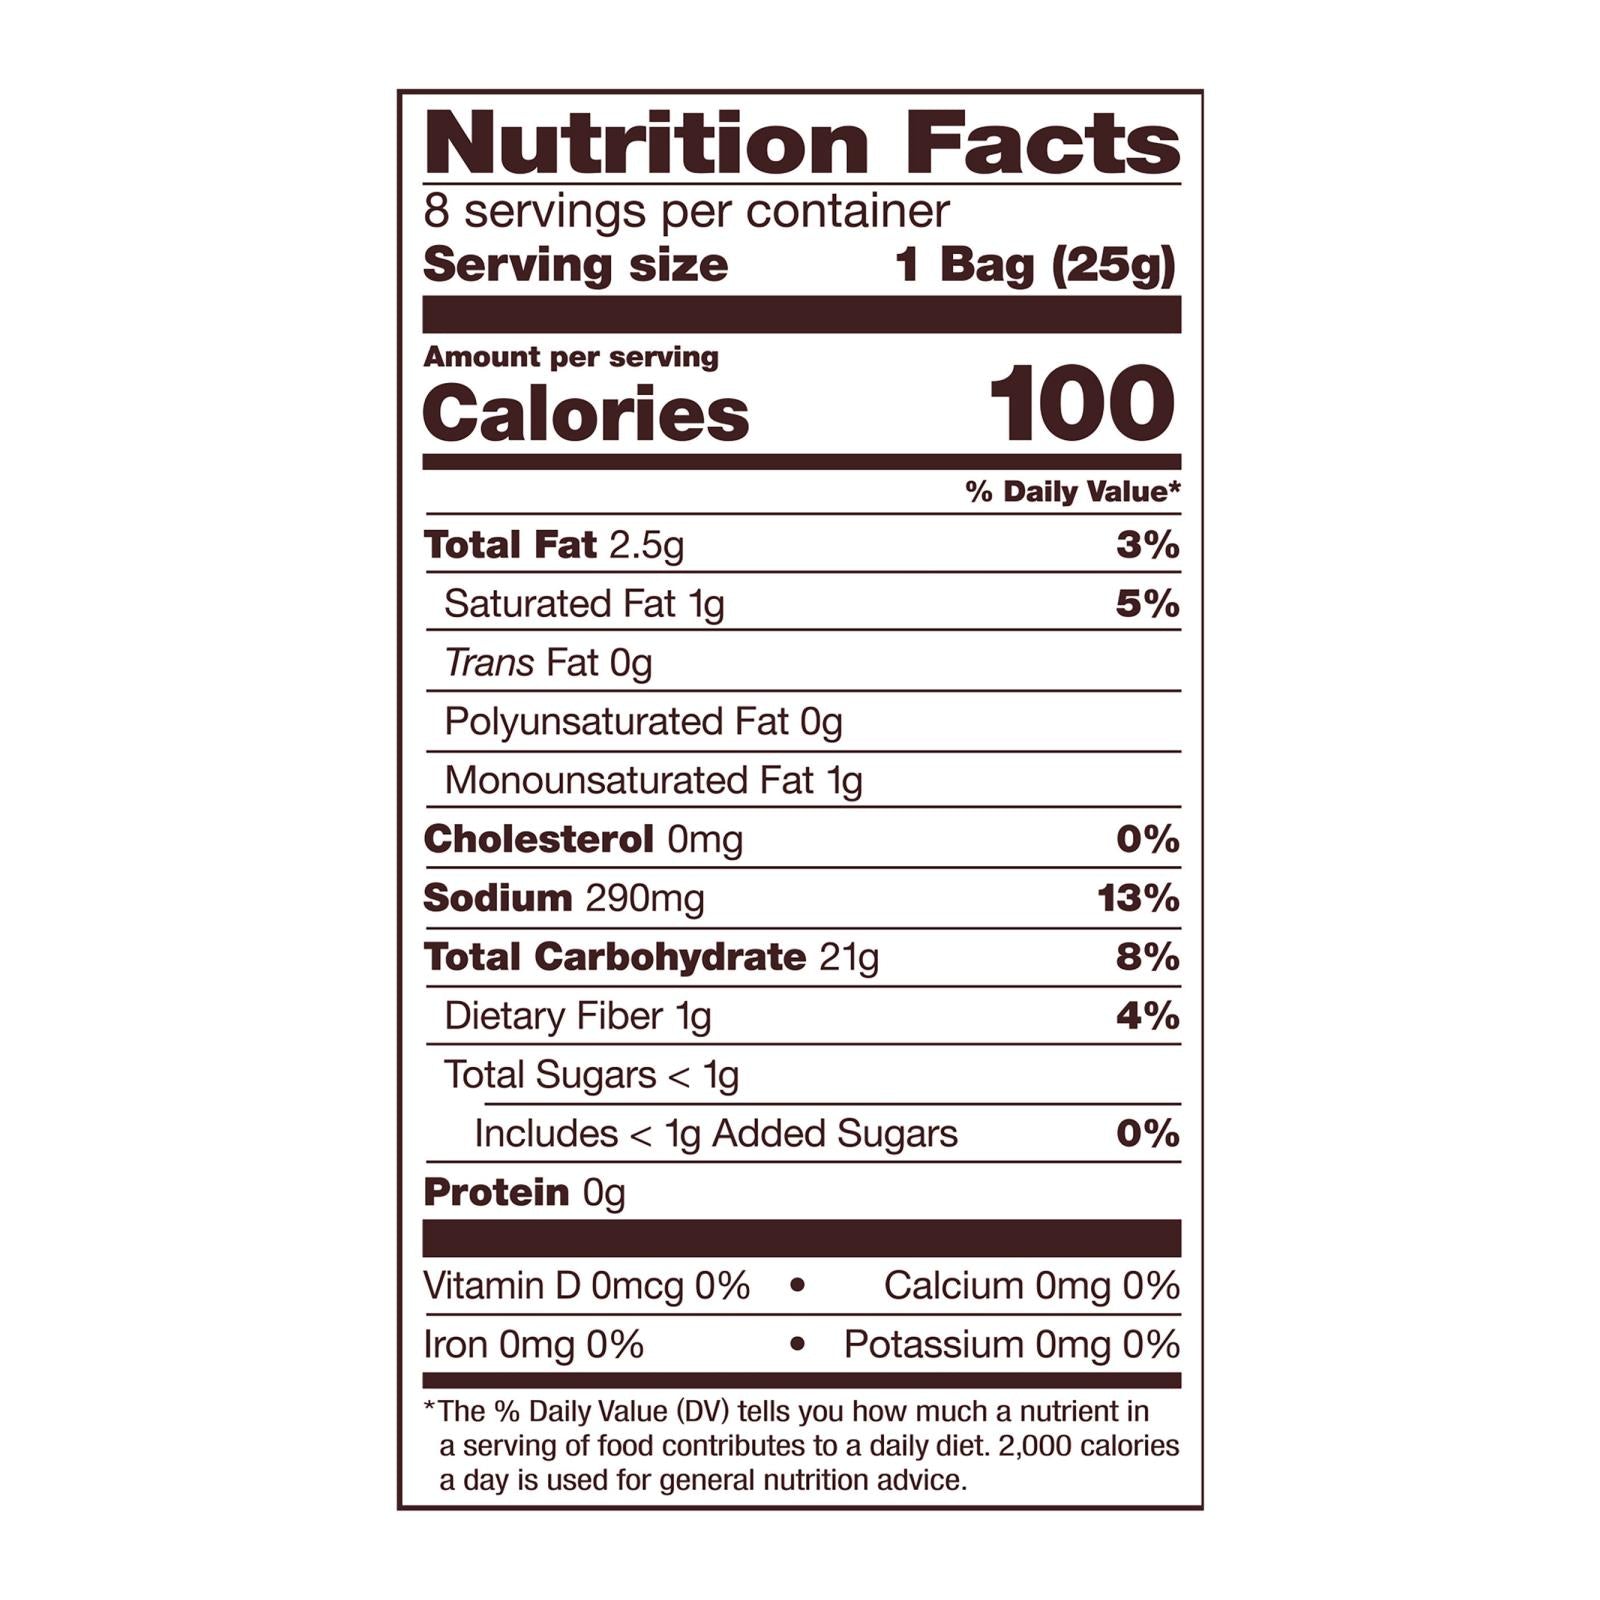 Snyder's Of Hanover Pretzel Sticks - Gluten Free 100 Calorie - Case Of 6 - 8 Count